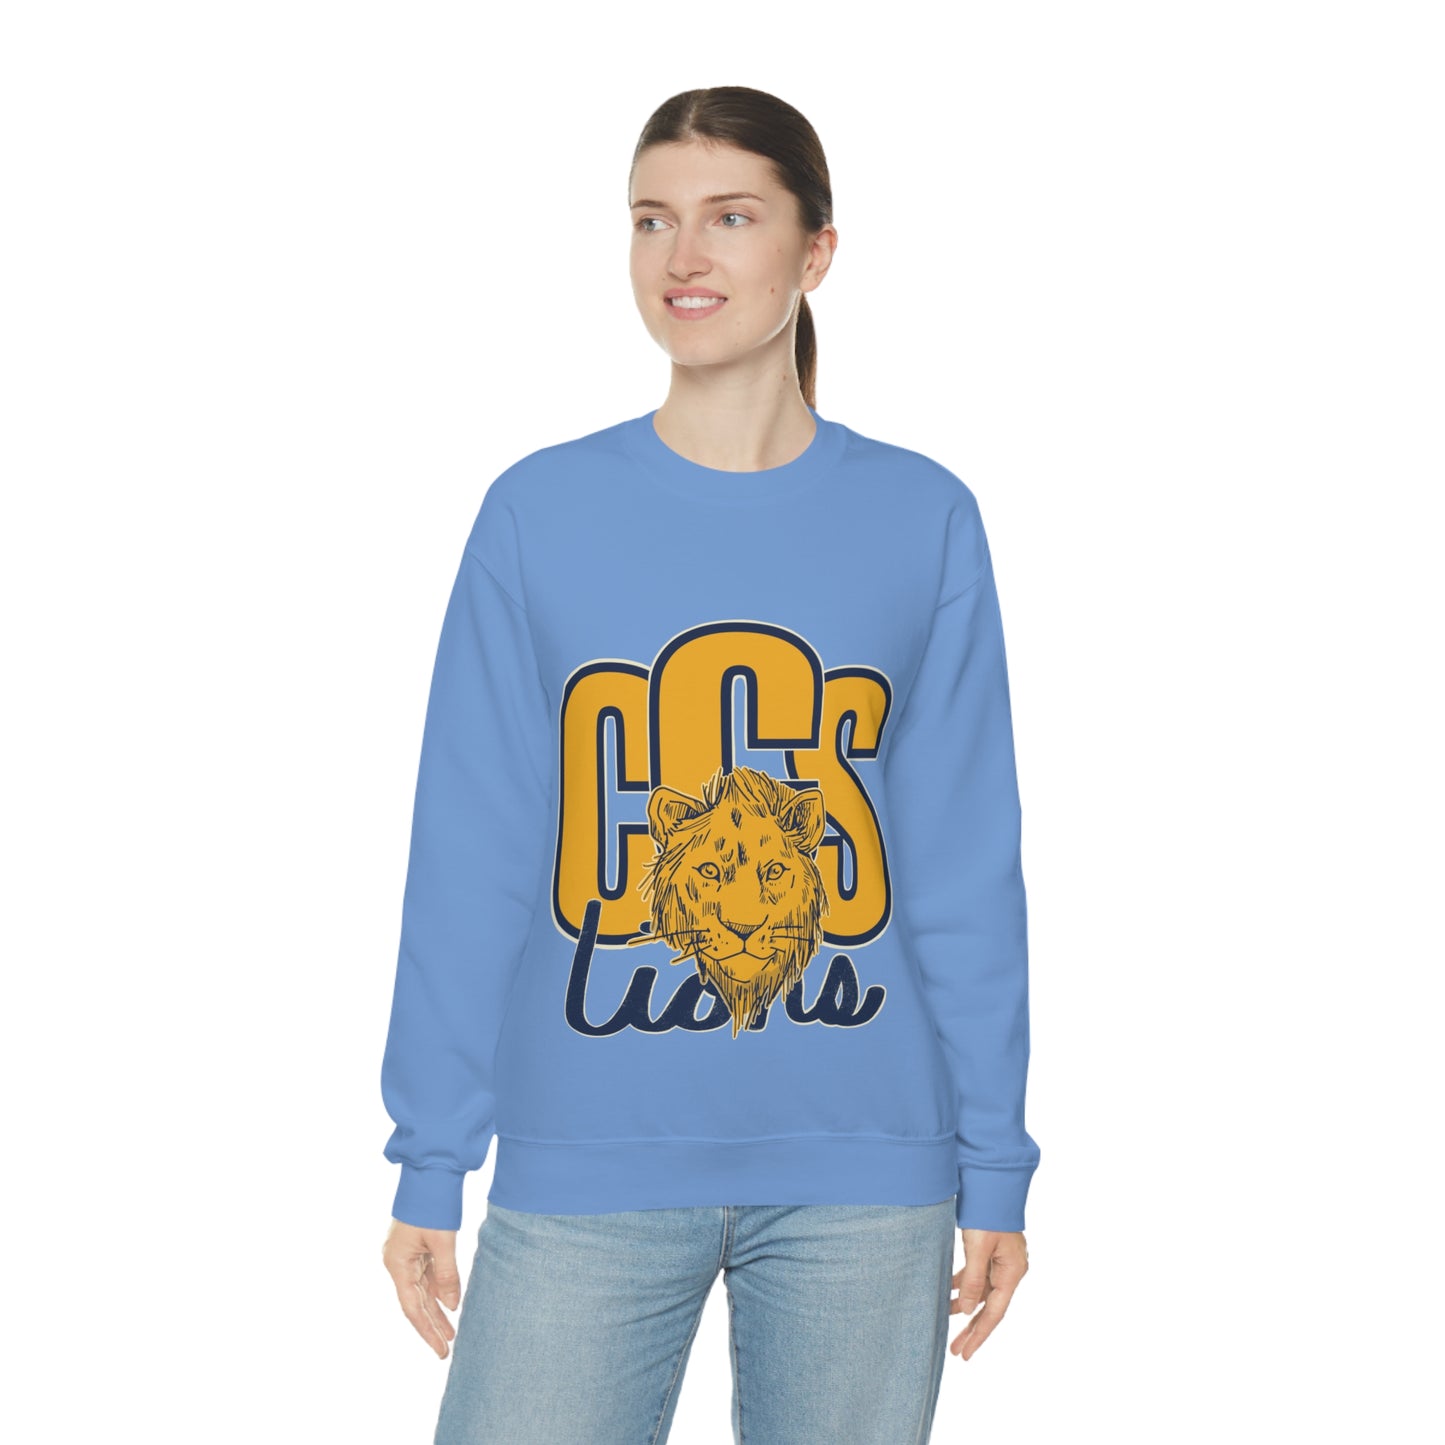 Coleman Christian School Lions Sweatshirt in Sport Grey and Light Blue